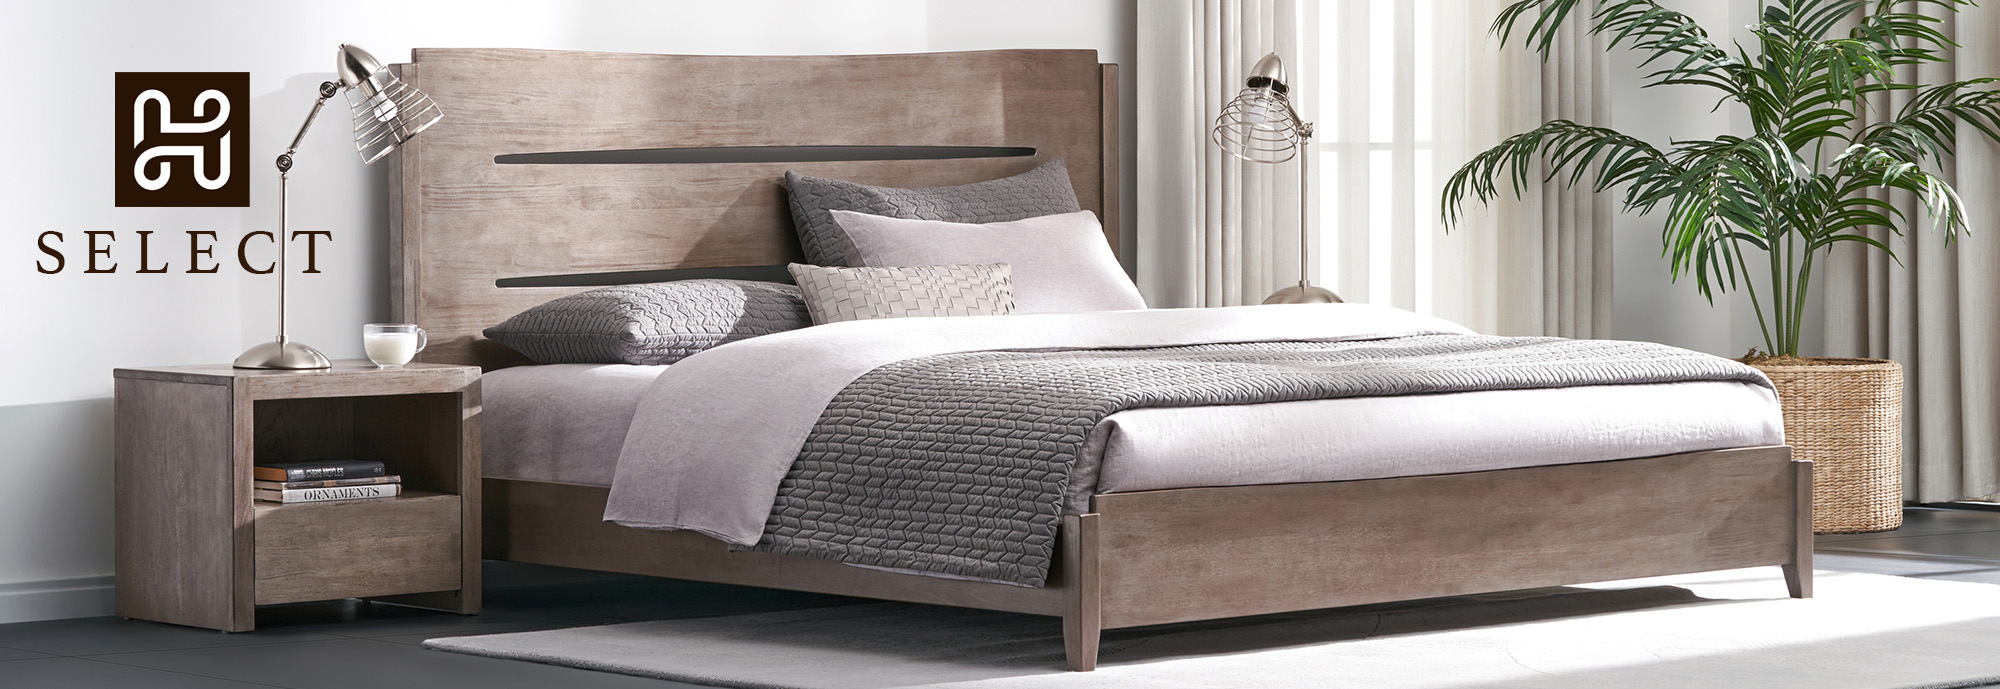 Homethreads Select Bedroom Furniture